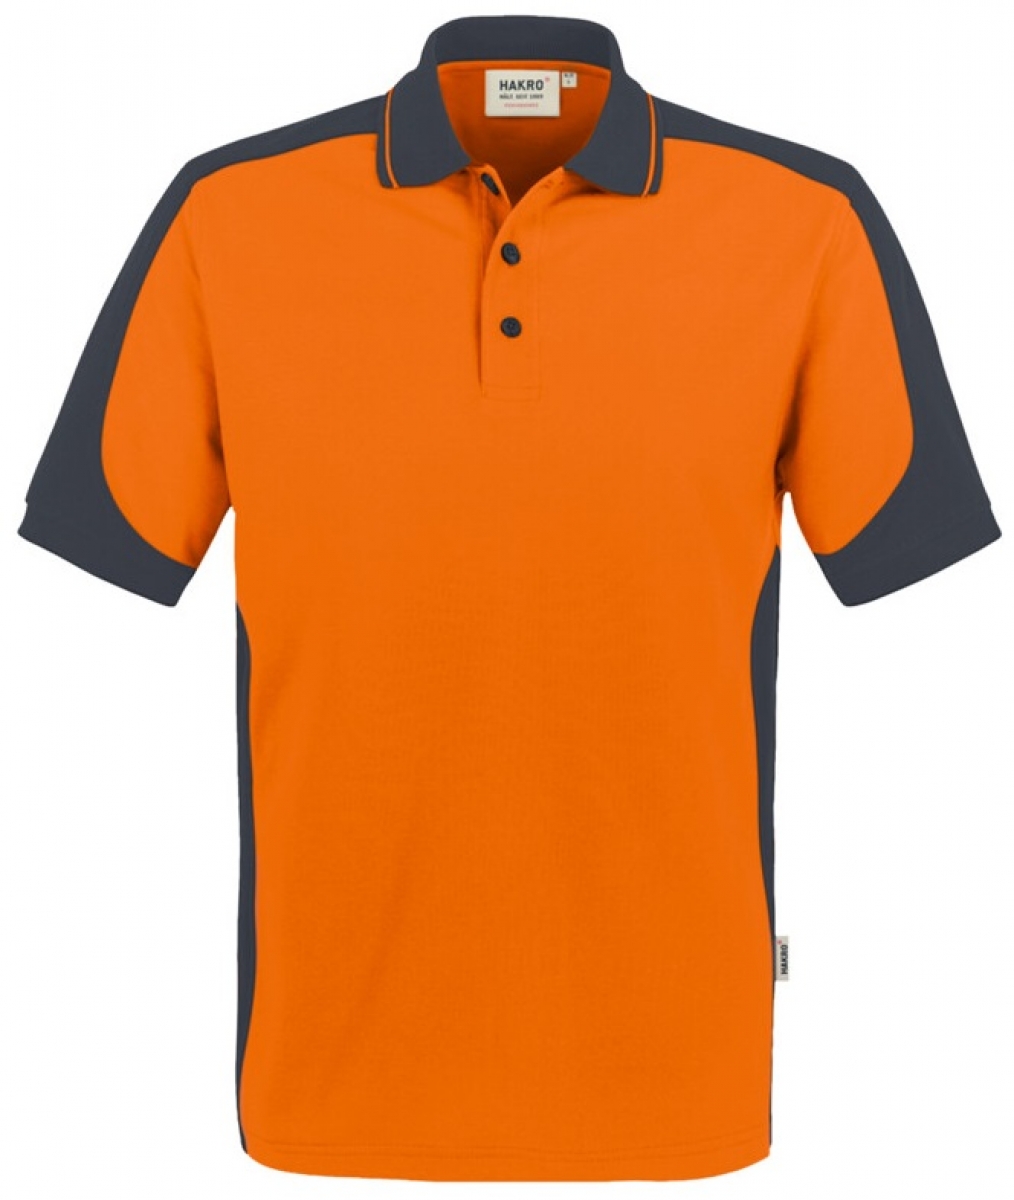 HAKRO-Worker-Shirts, Poloshirt-Contrast Performance, orange